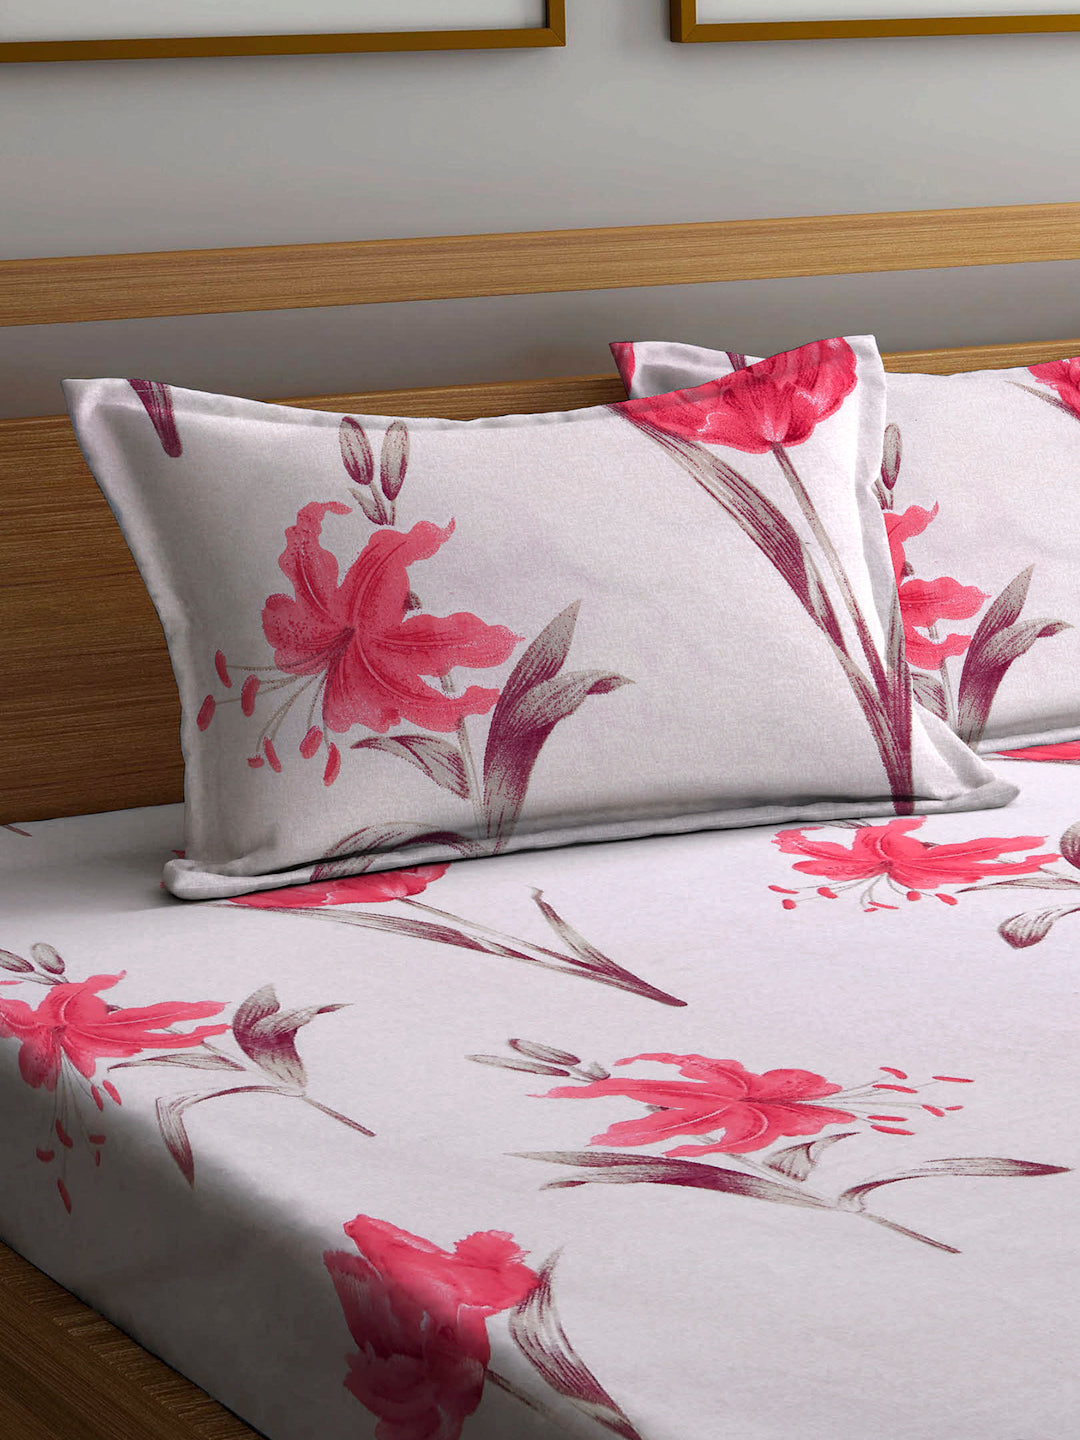 Arrabi Beige Floral TC Cotton Blend Super King Size Bookfold Bedsheet with 2 Pillow Covers (270 X 260 cm)